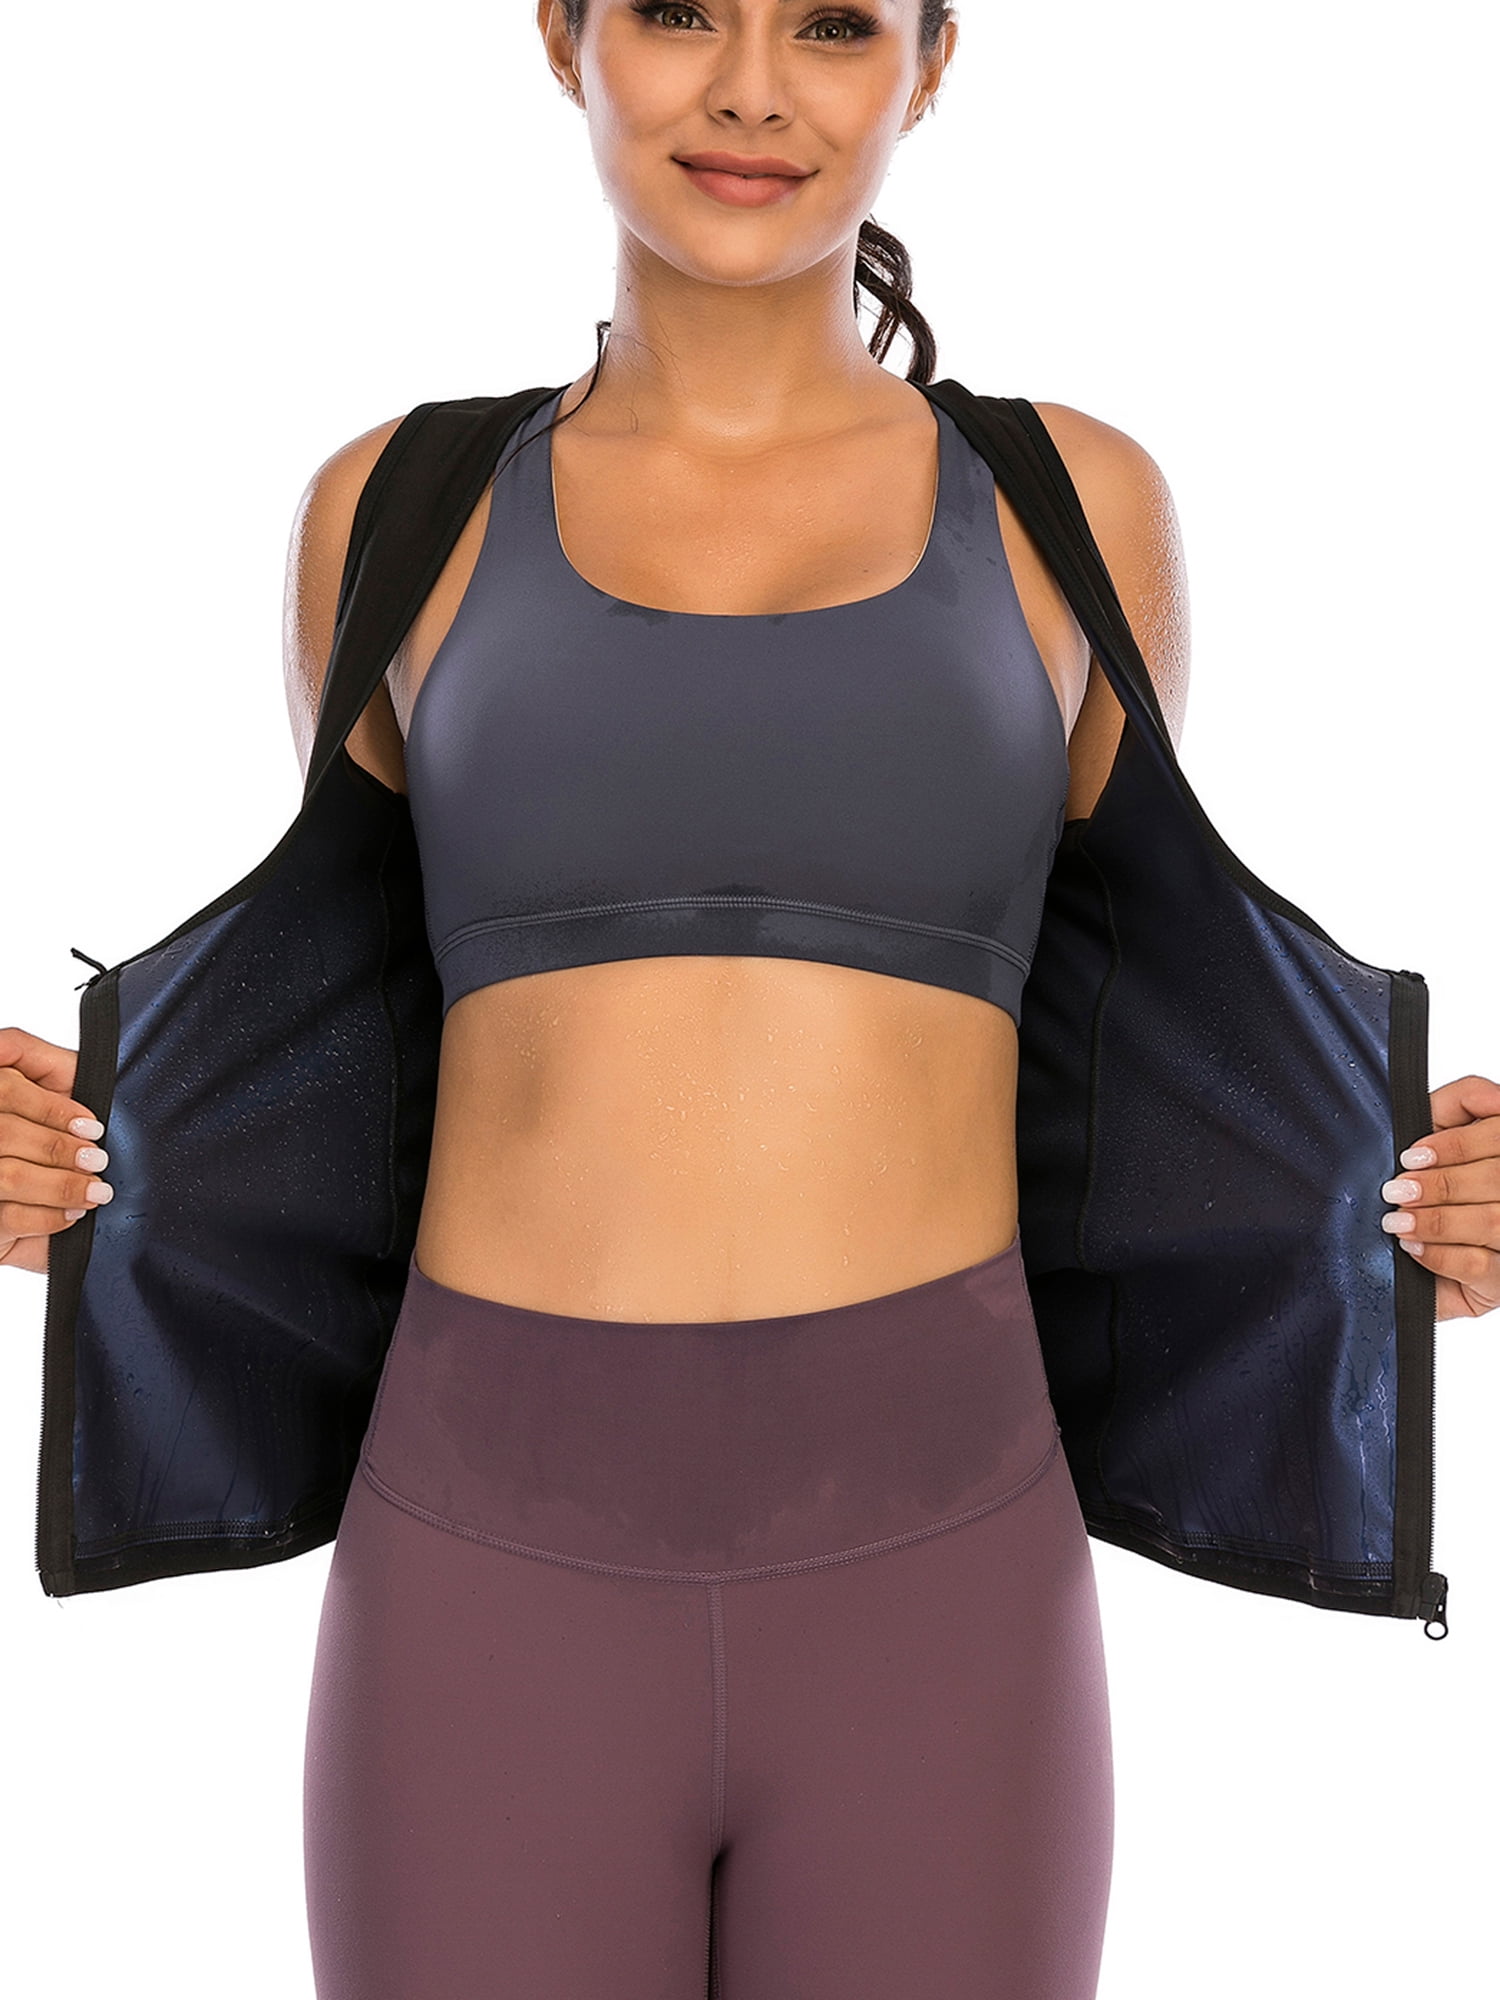 Hopgo Waist Trainer Sweat Vest for Women Weight Loss Plus Size Sauna Corset Belt Slimming Body Shaper 